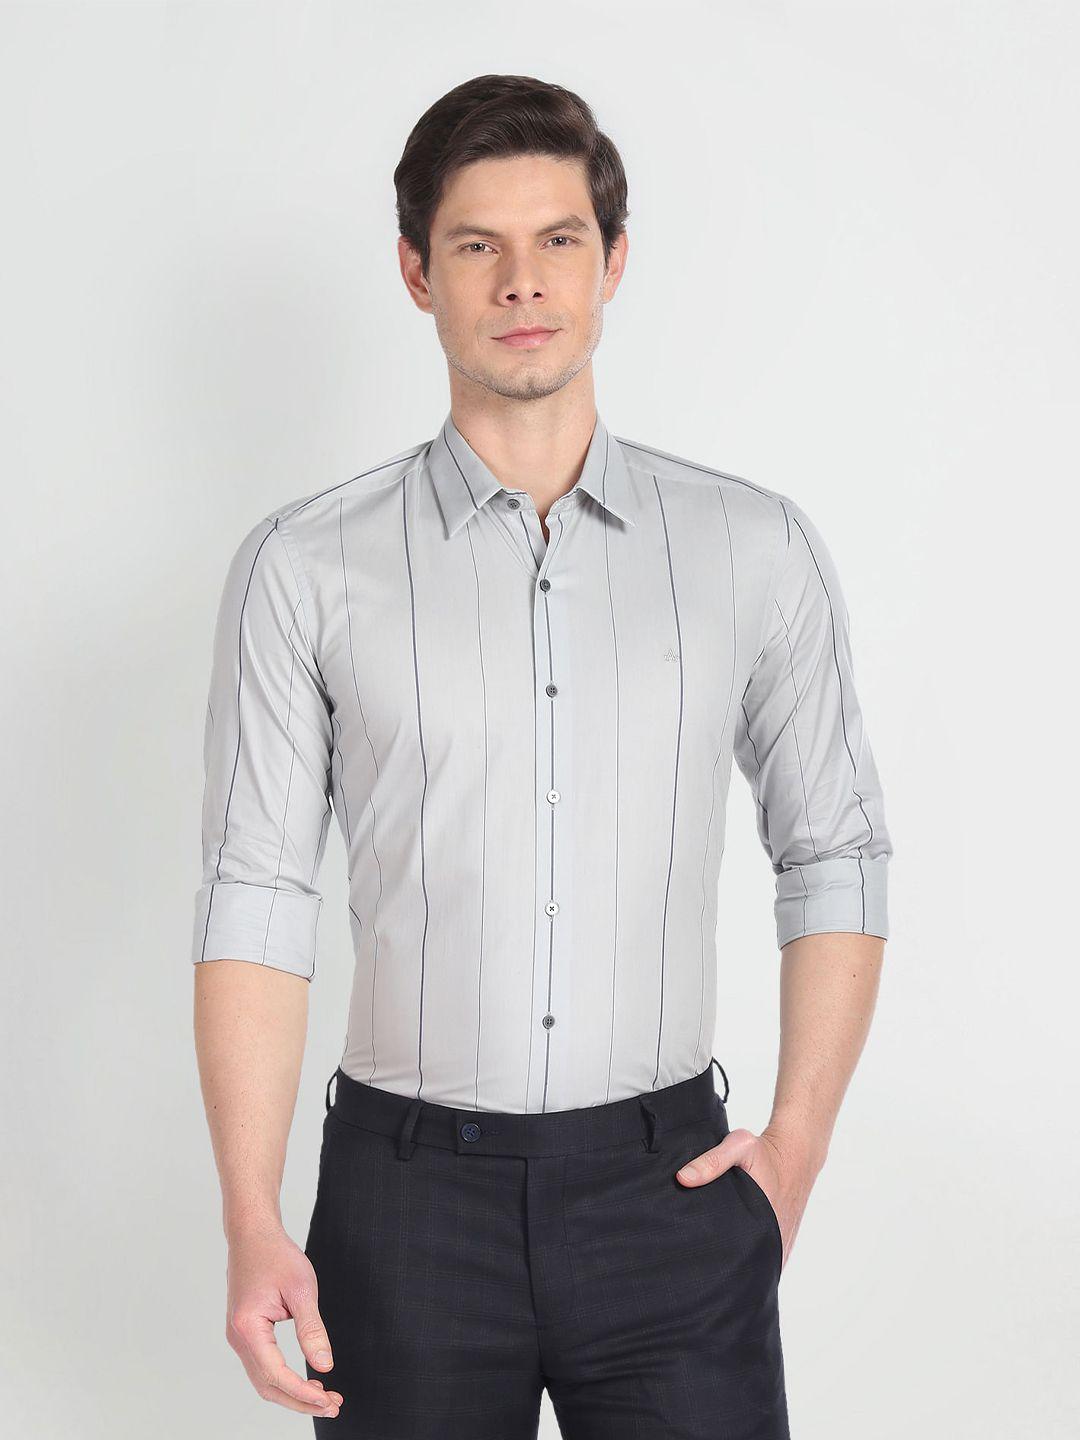 arrow new york slim fit vertical stripes twill pure cotton formal shirt